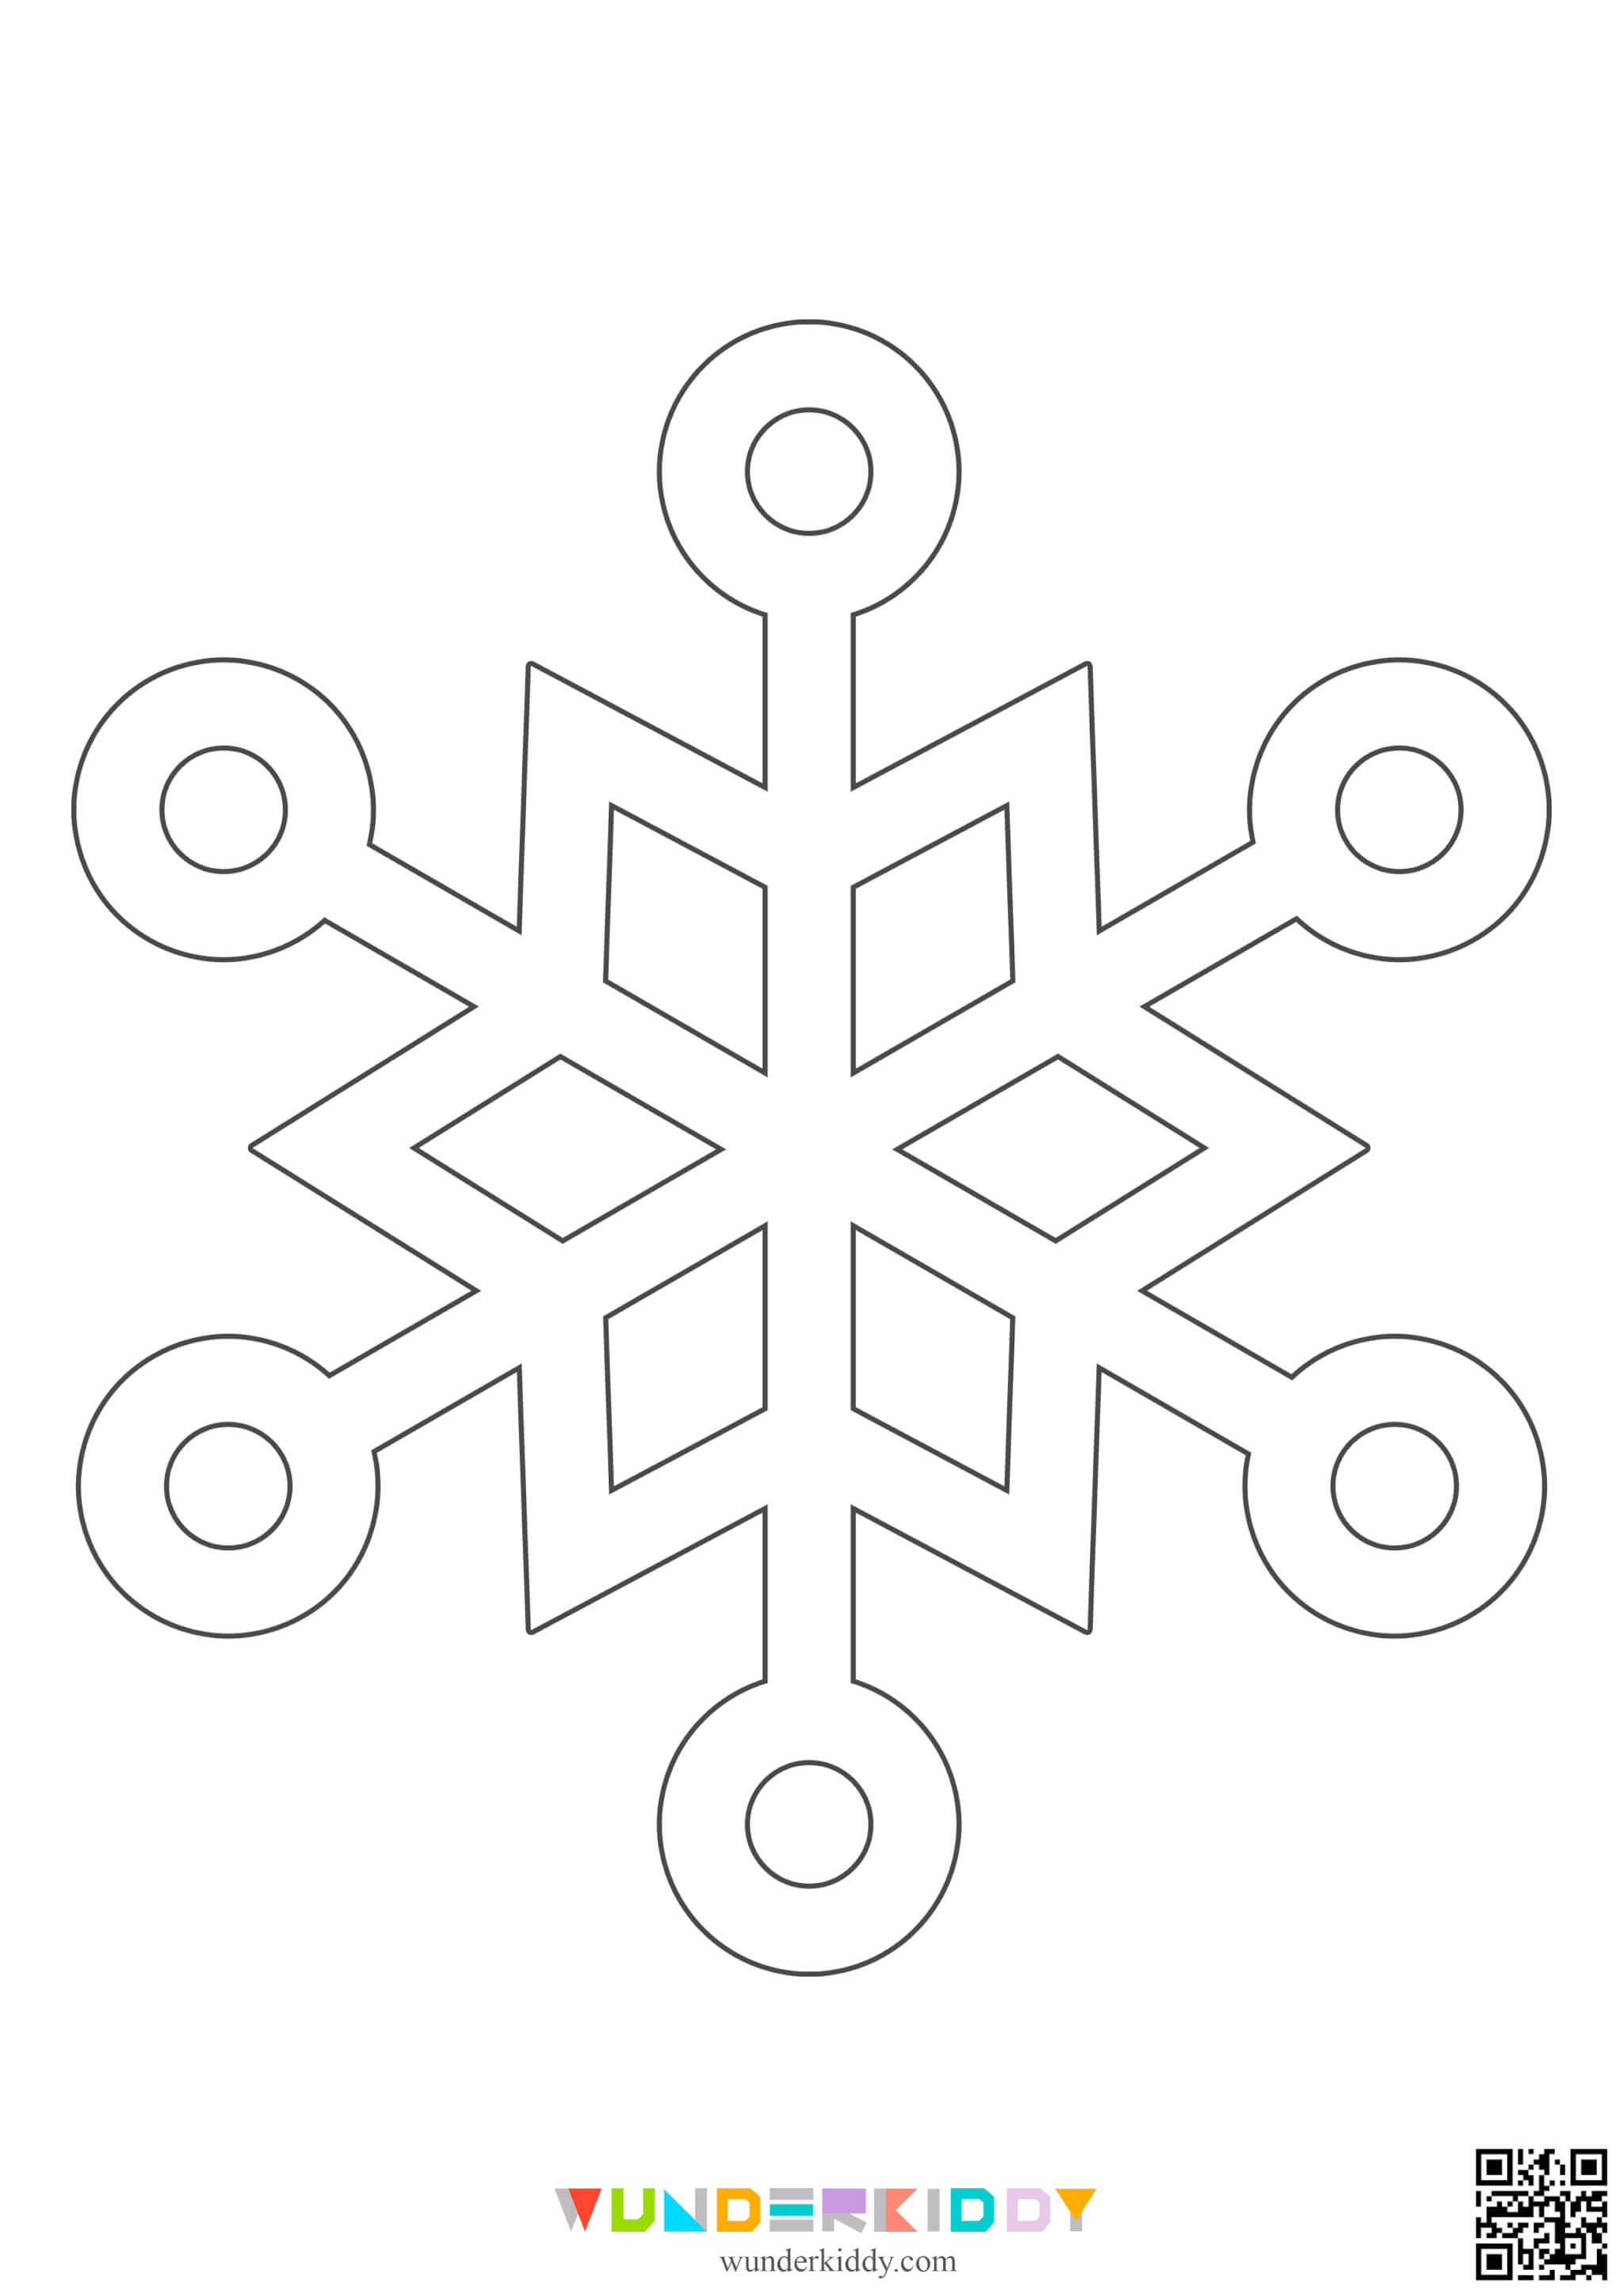 Snowflake Stencil Patterns - Image 2